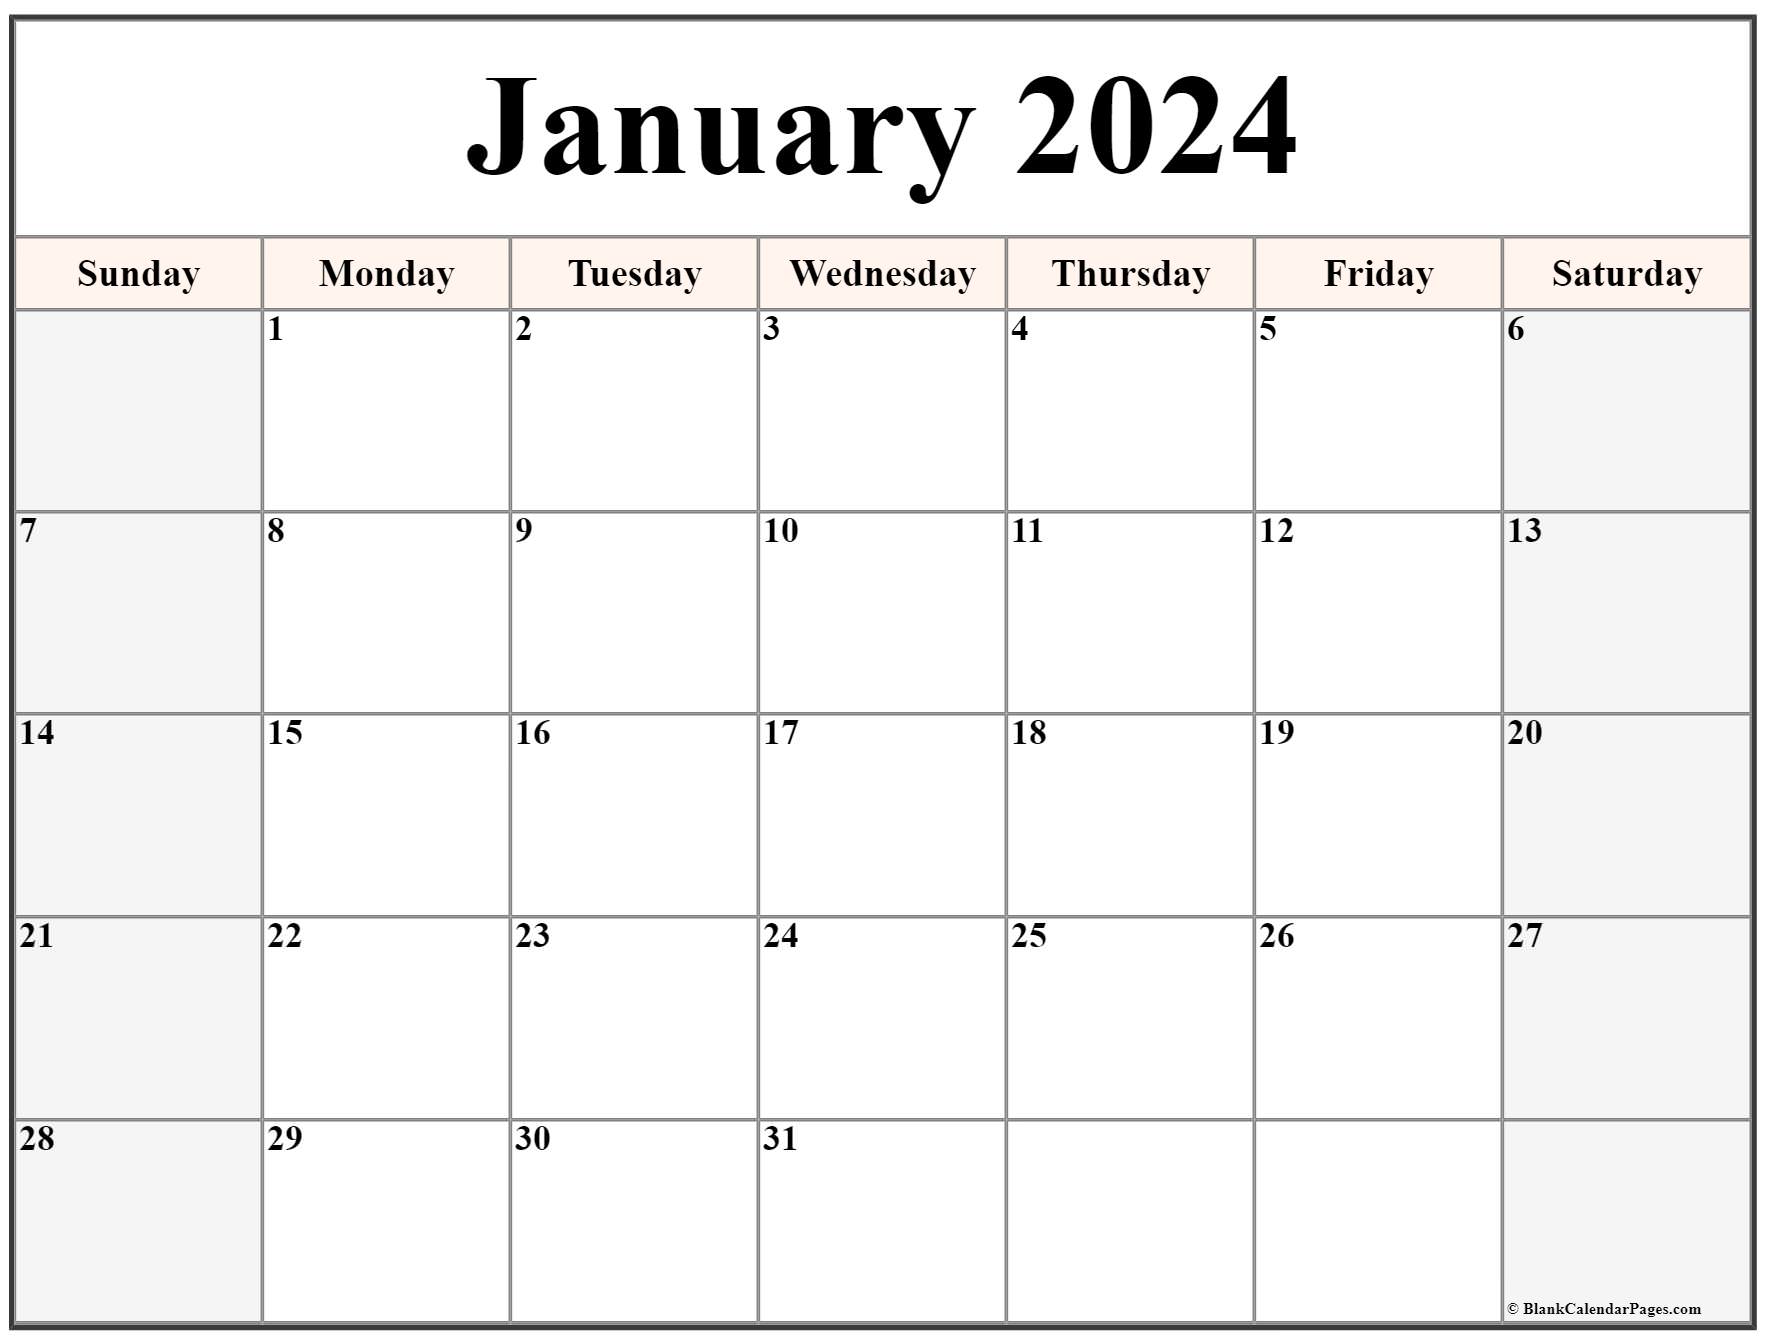 January 2024 Calendar In English Top The Best List Of Calendar January 2024